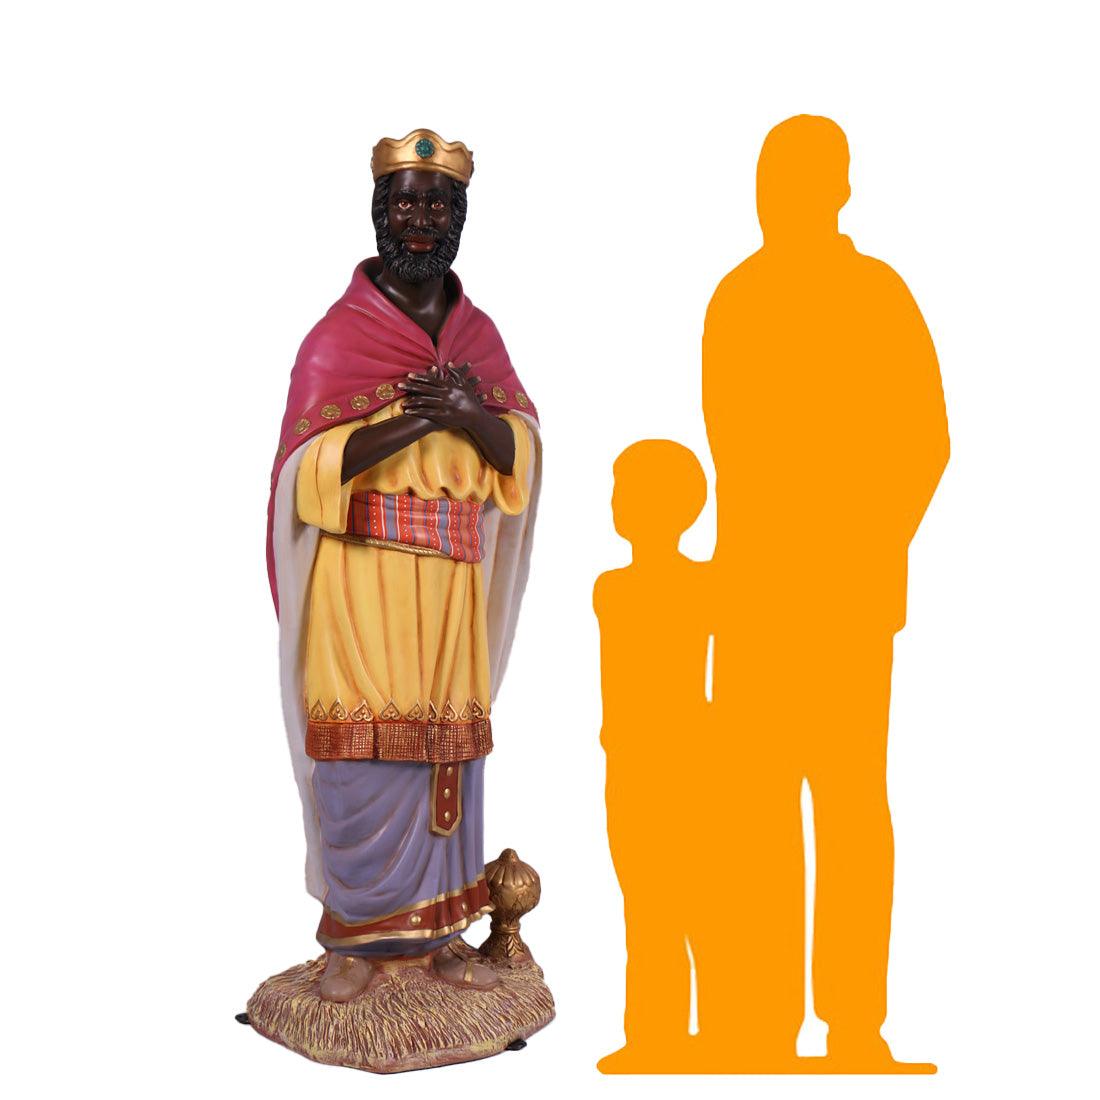 King Balthasar Nativity Christmas Statue - LM Treasures Prop Rentals 